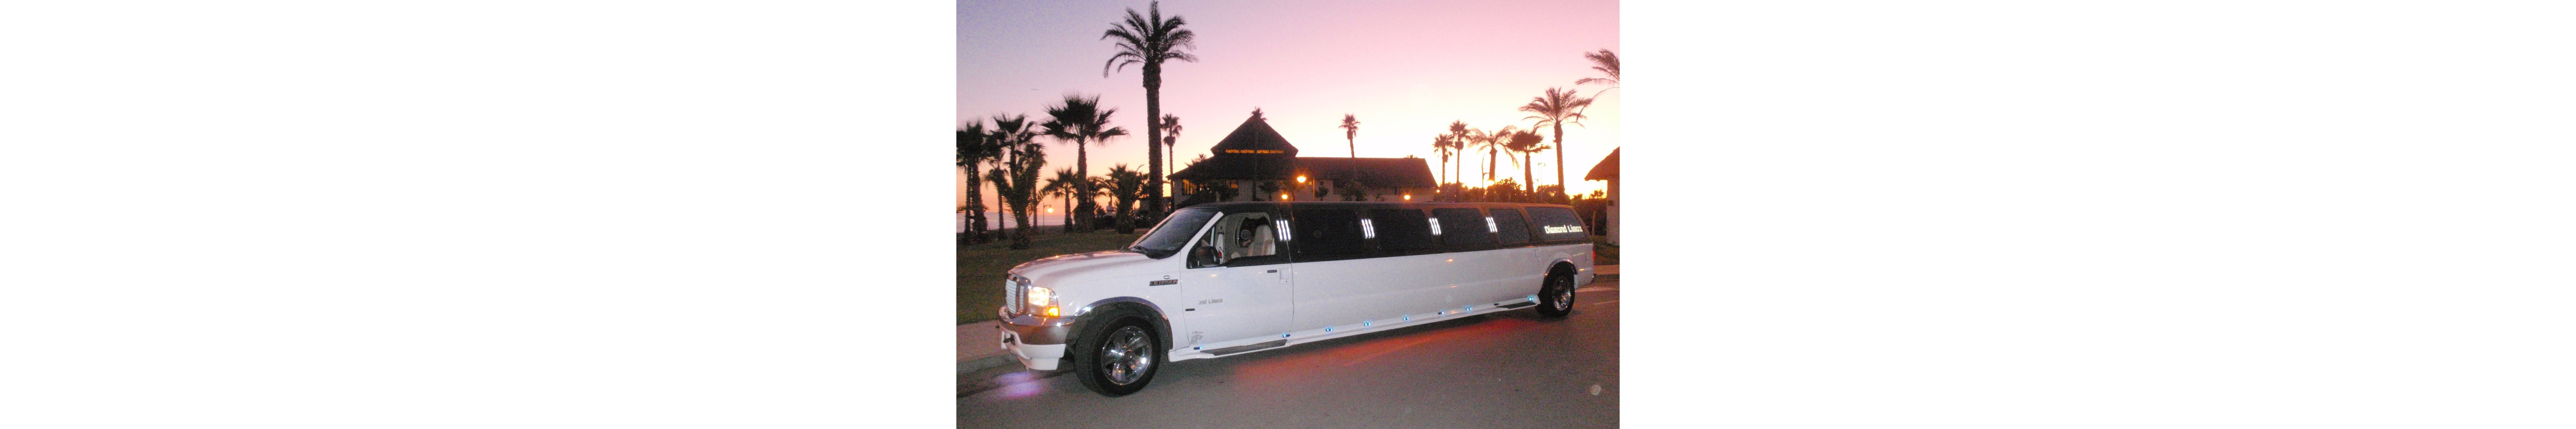 Limousine Hire & Rental on the Costa del Sol